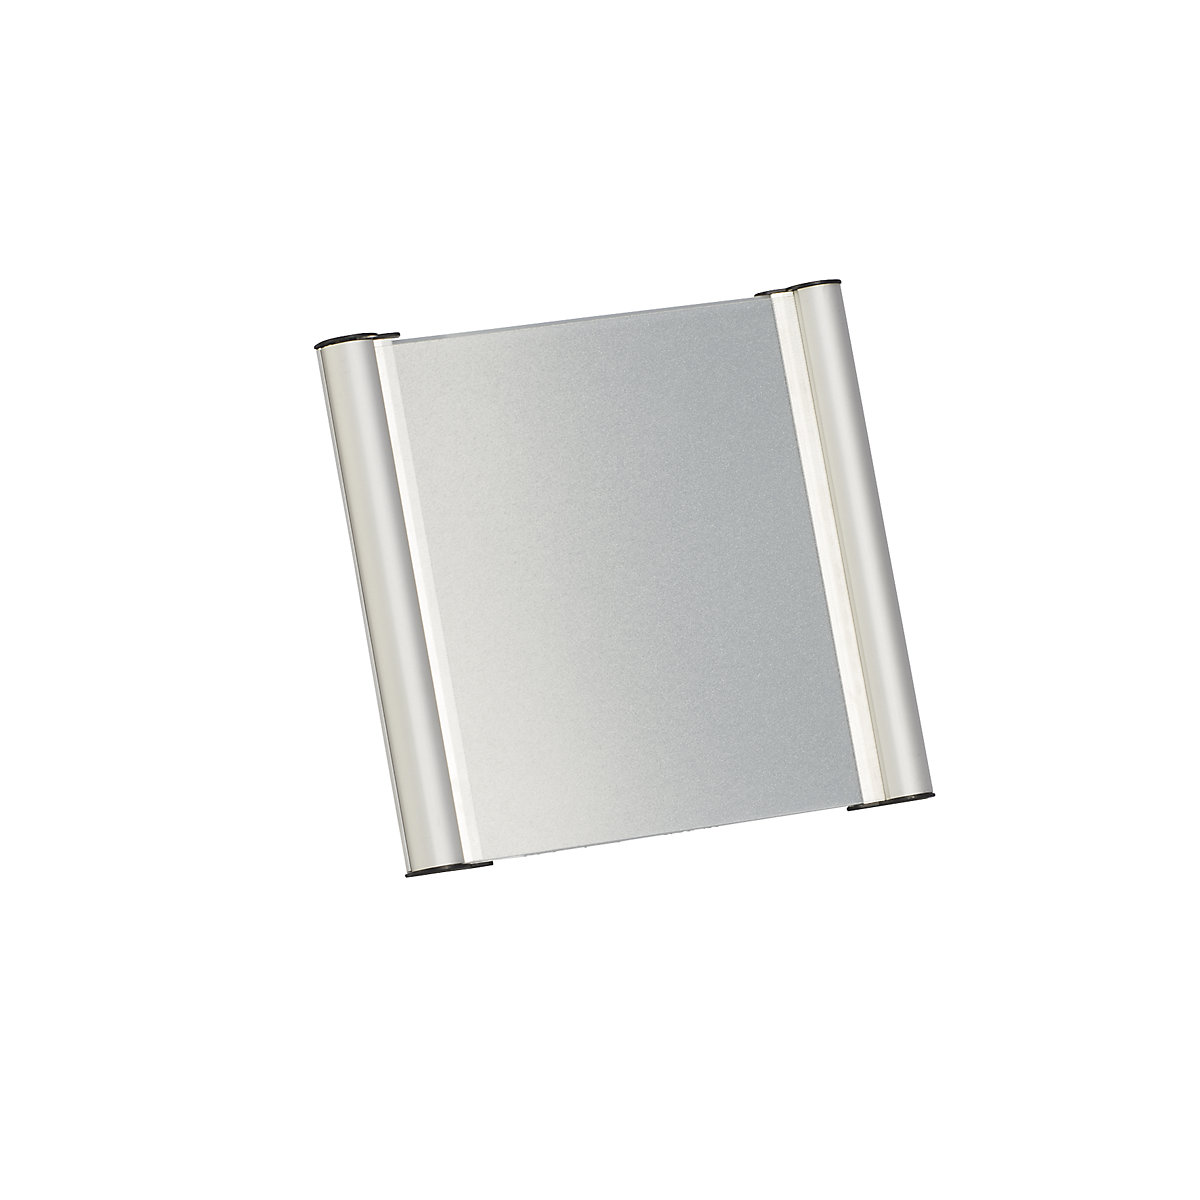 Door sign, aluminium profile frame, HxWxD 100 x 100 x 8 mm, pack of 10-4